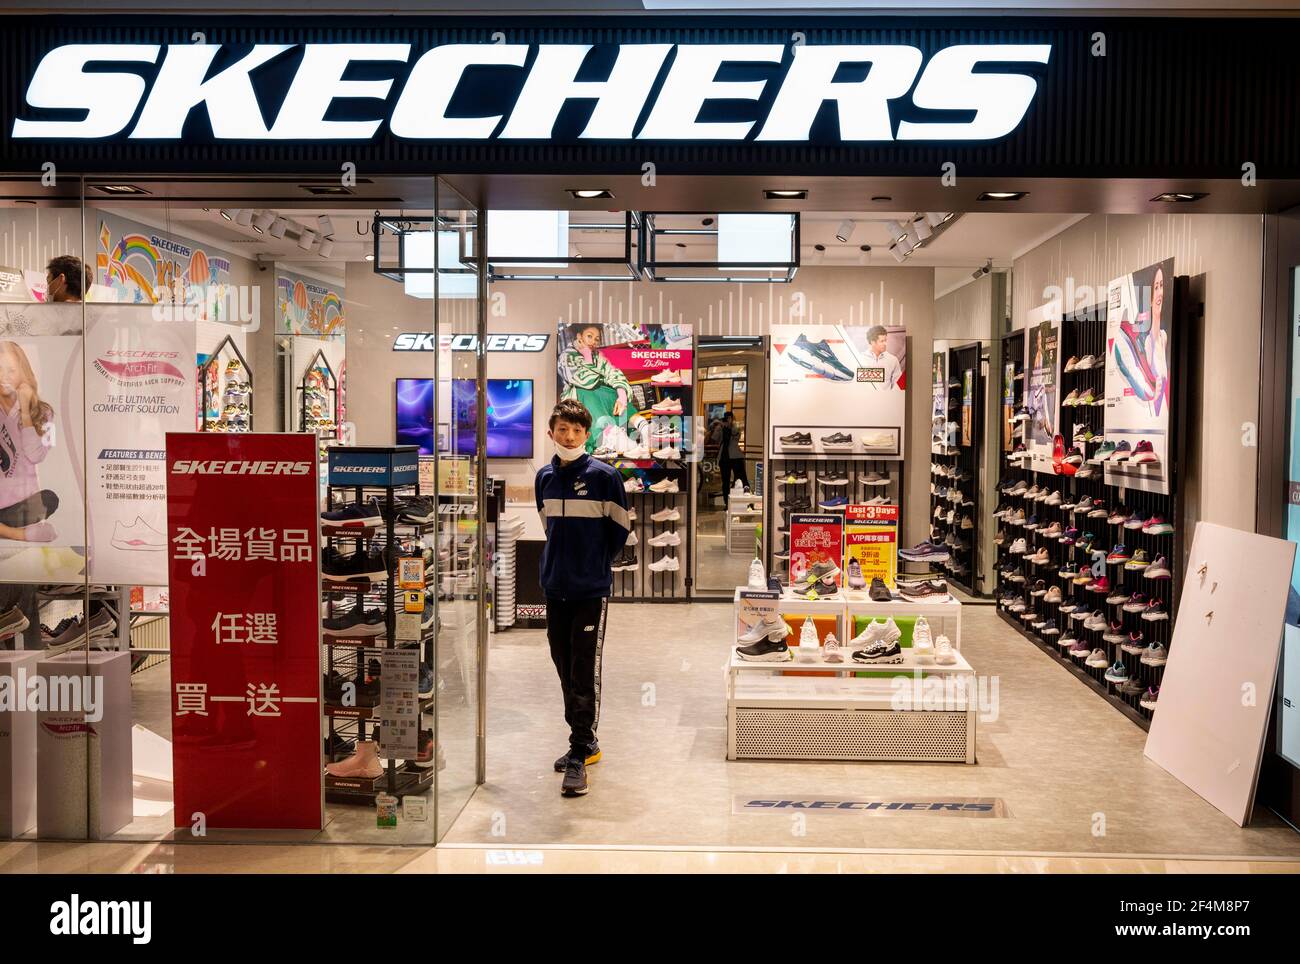 American and footwear brand, Skechers seen in Hong Kong Stock Photo Alamy